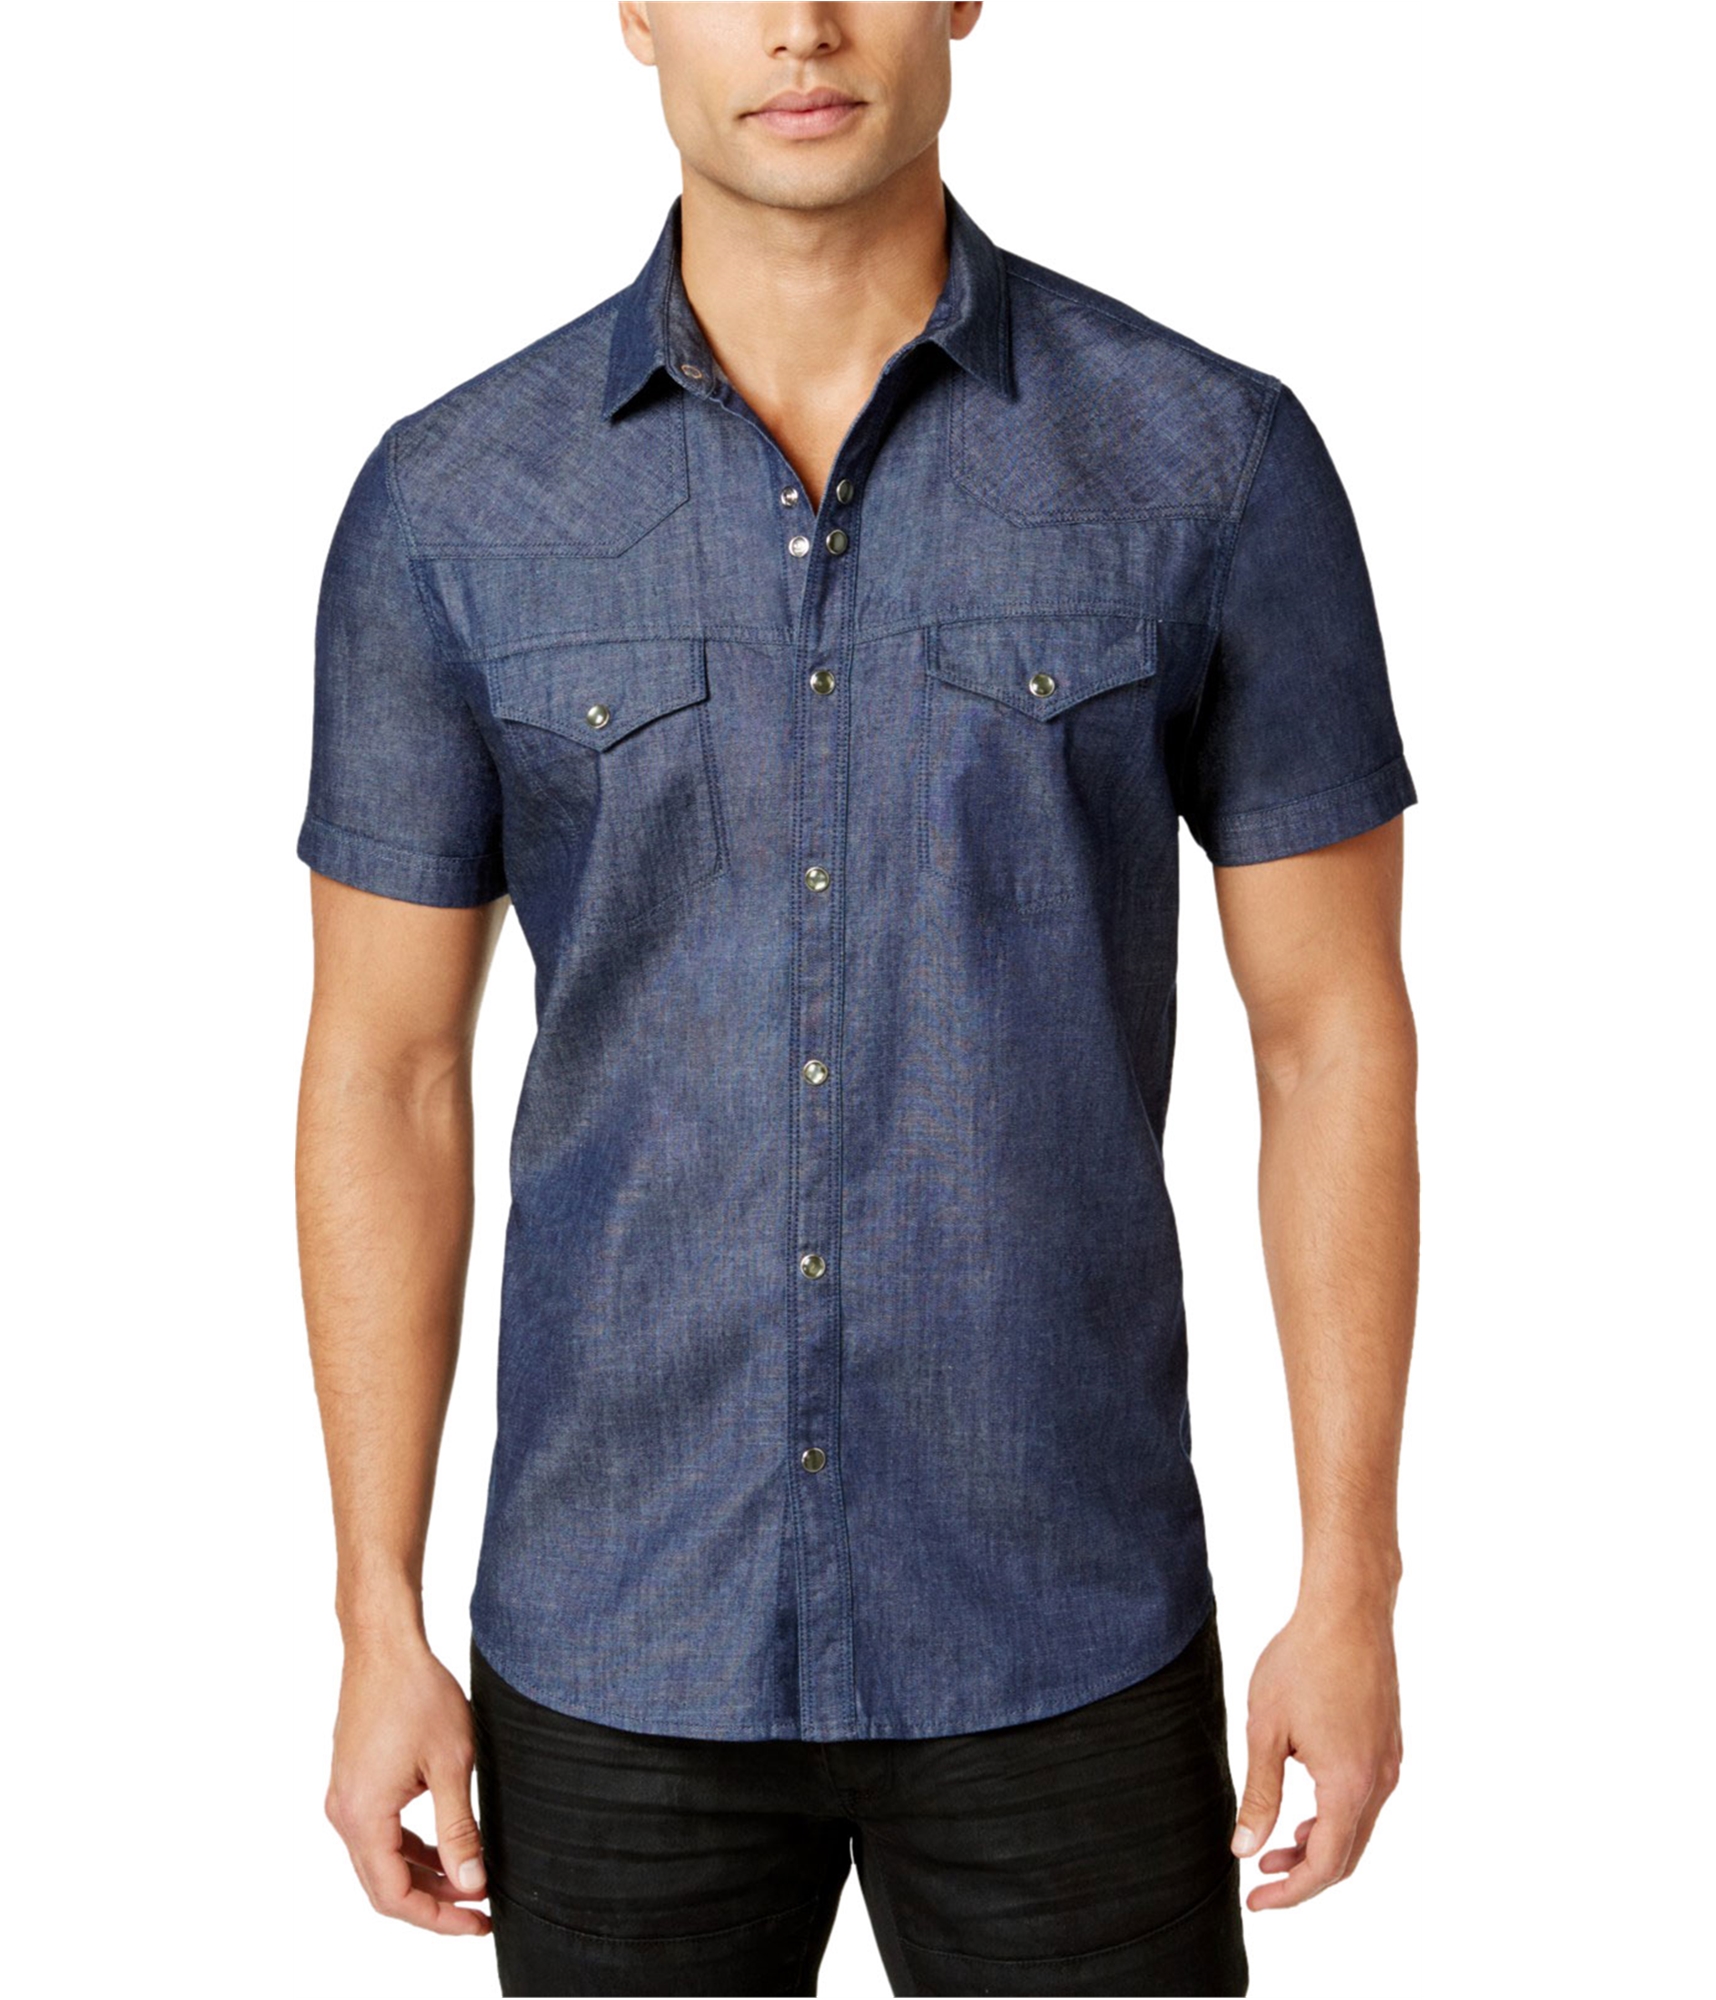 I-N-C Mens Denim Button Up Shirt, Blue, Large 706257326923 | eBay